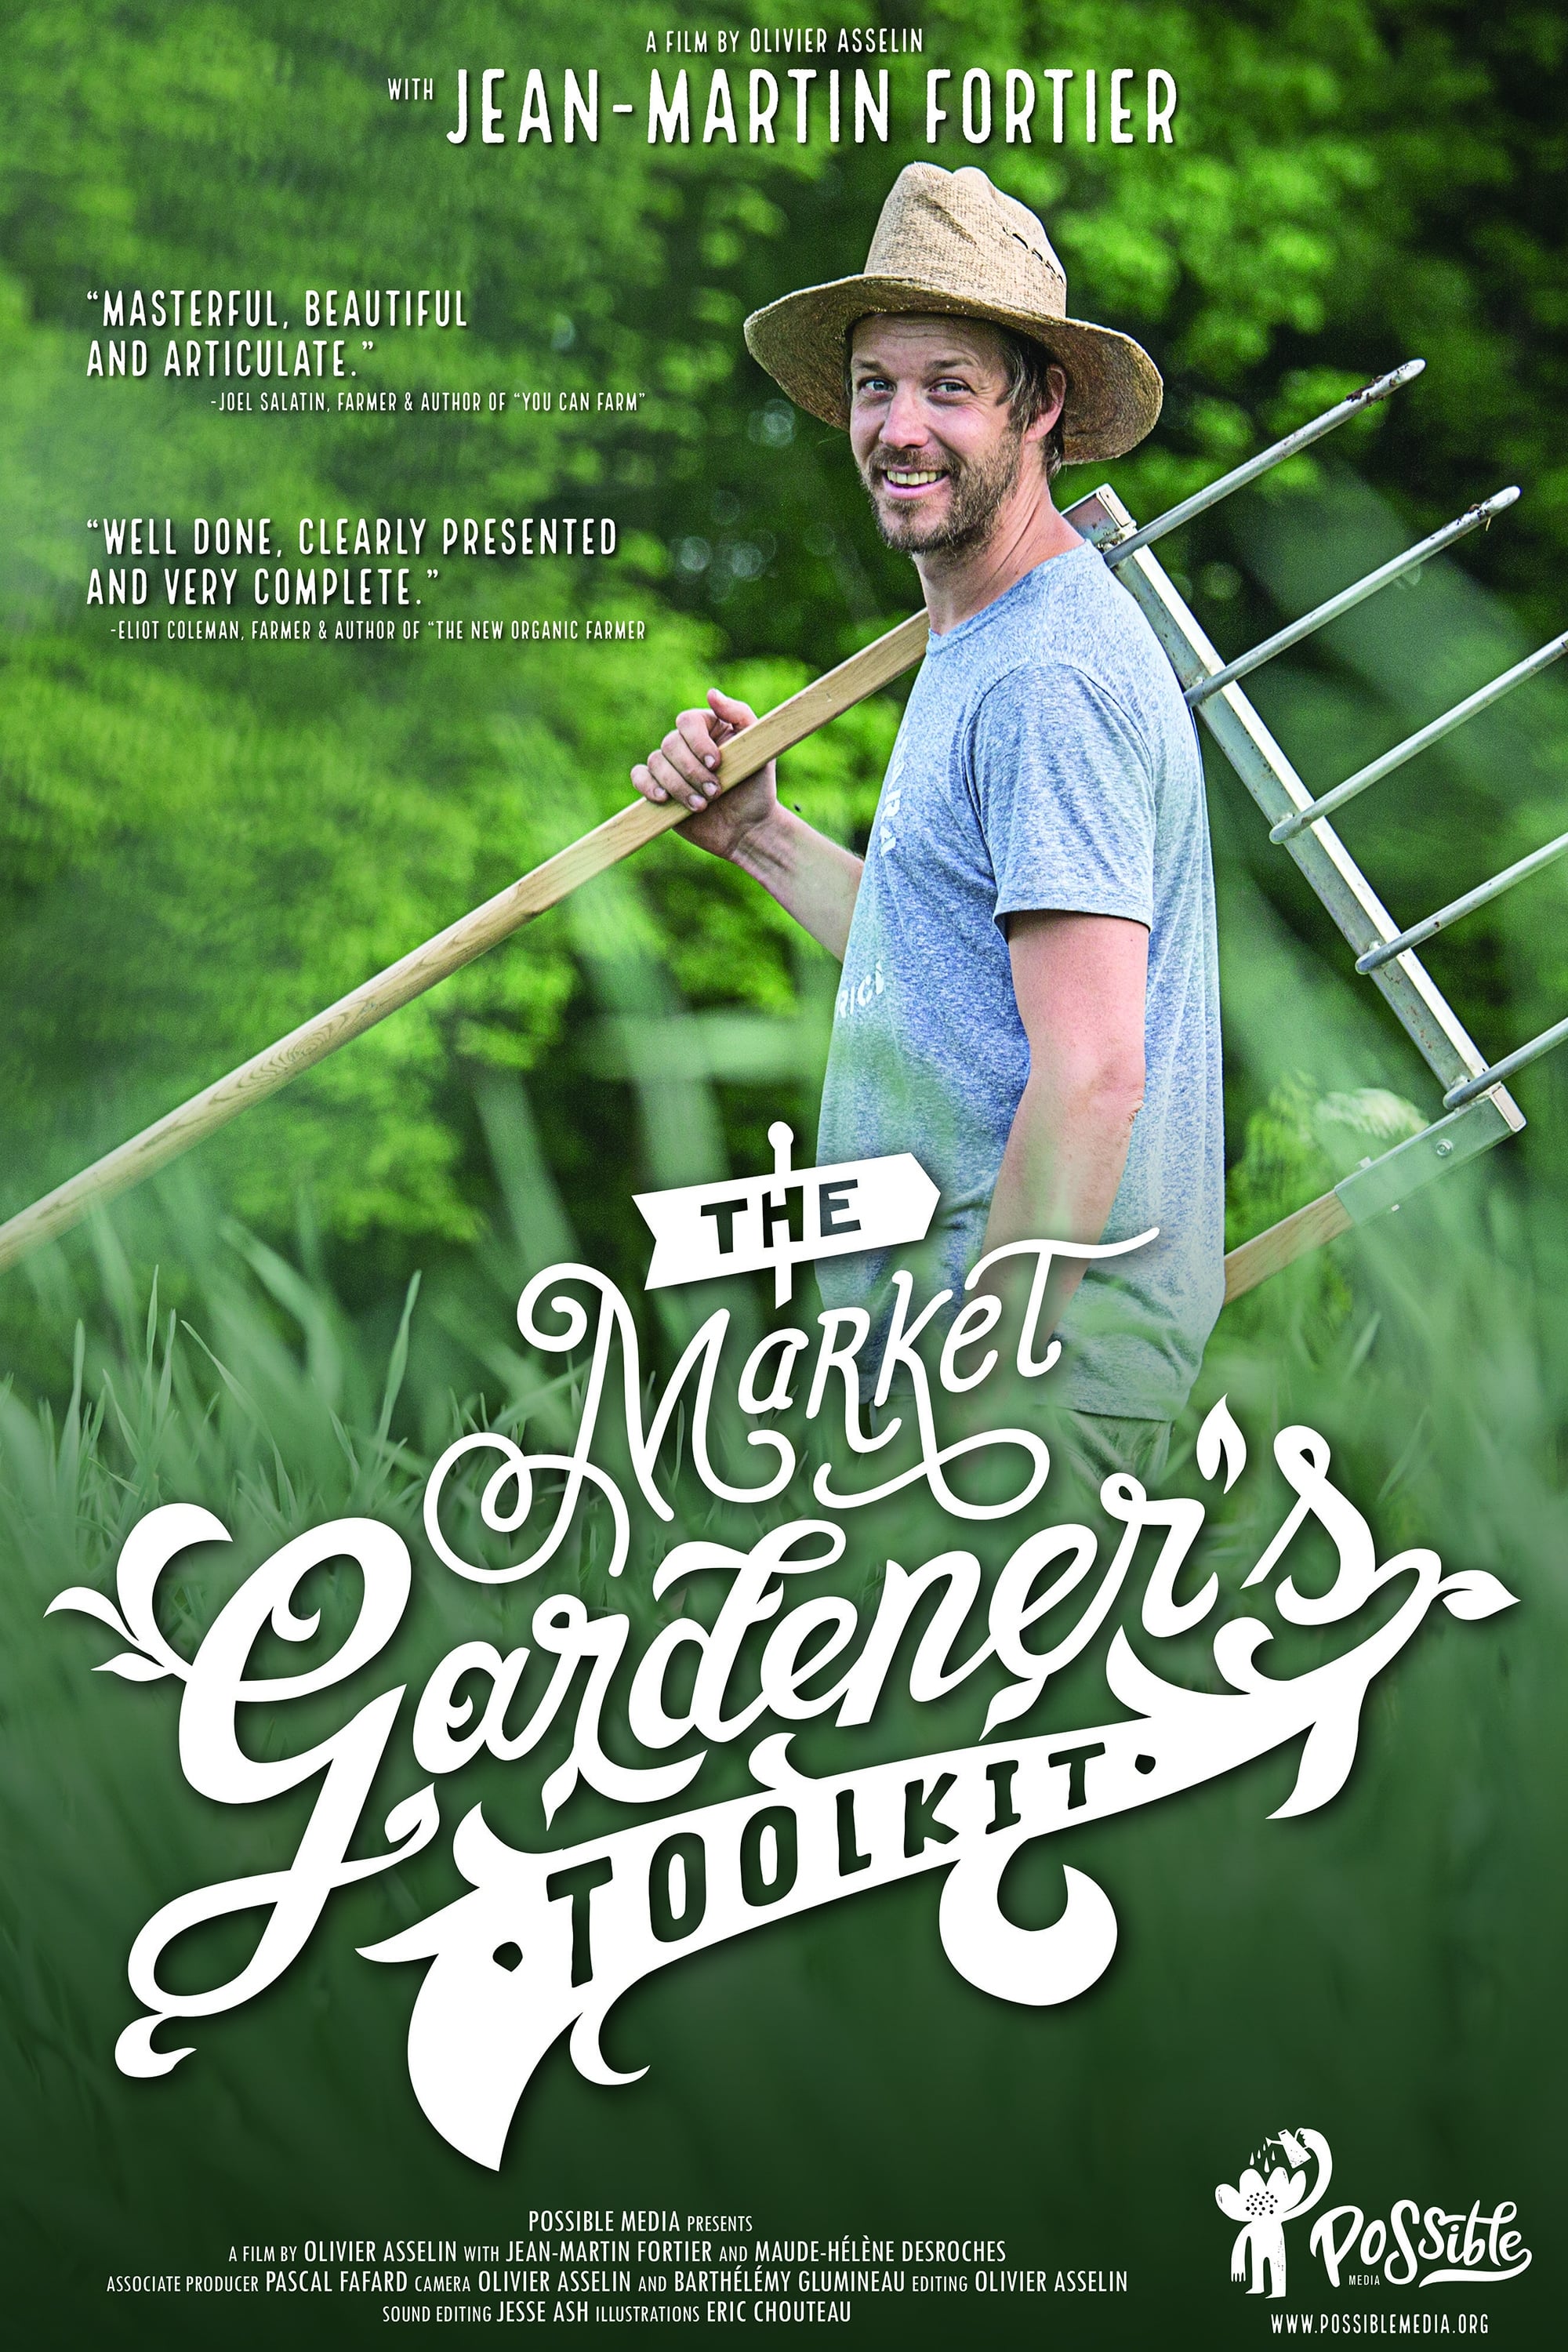 The Market Gardener's Toolkit